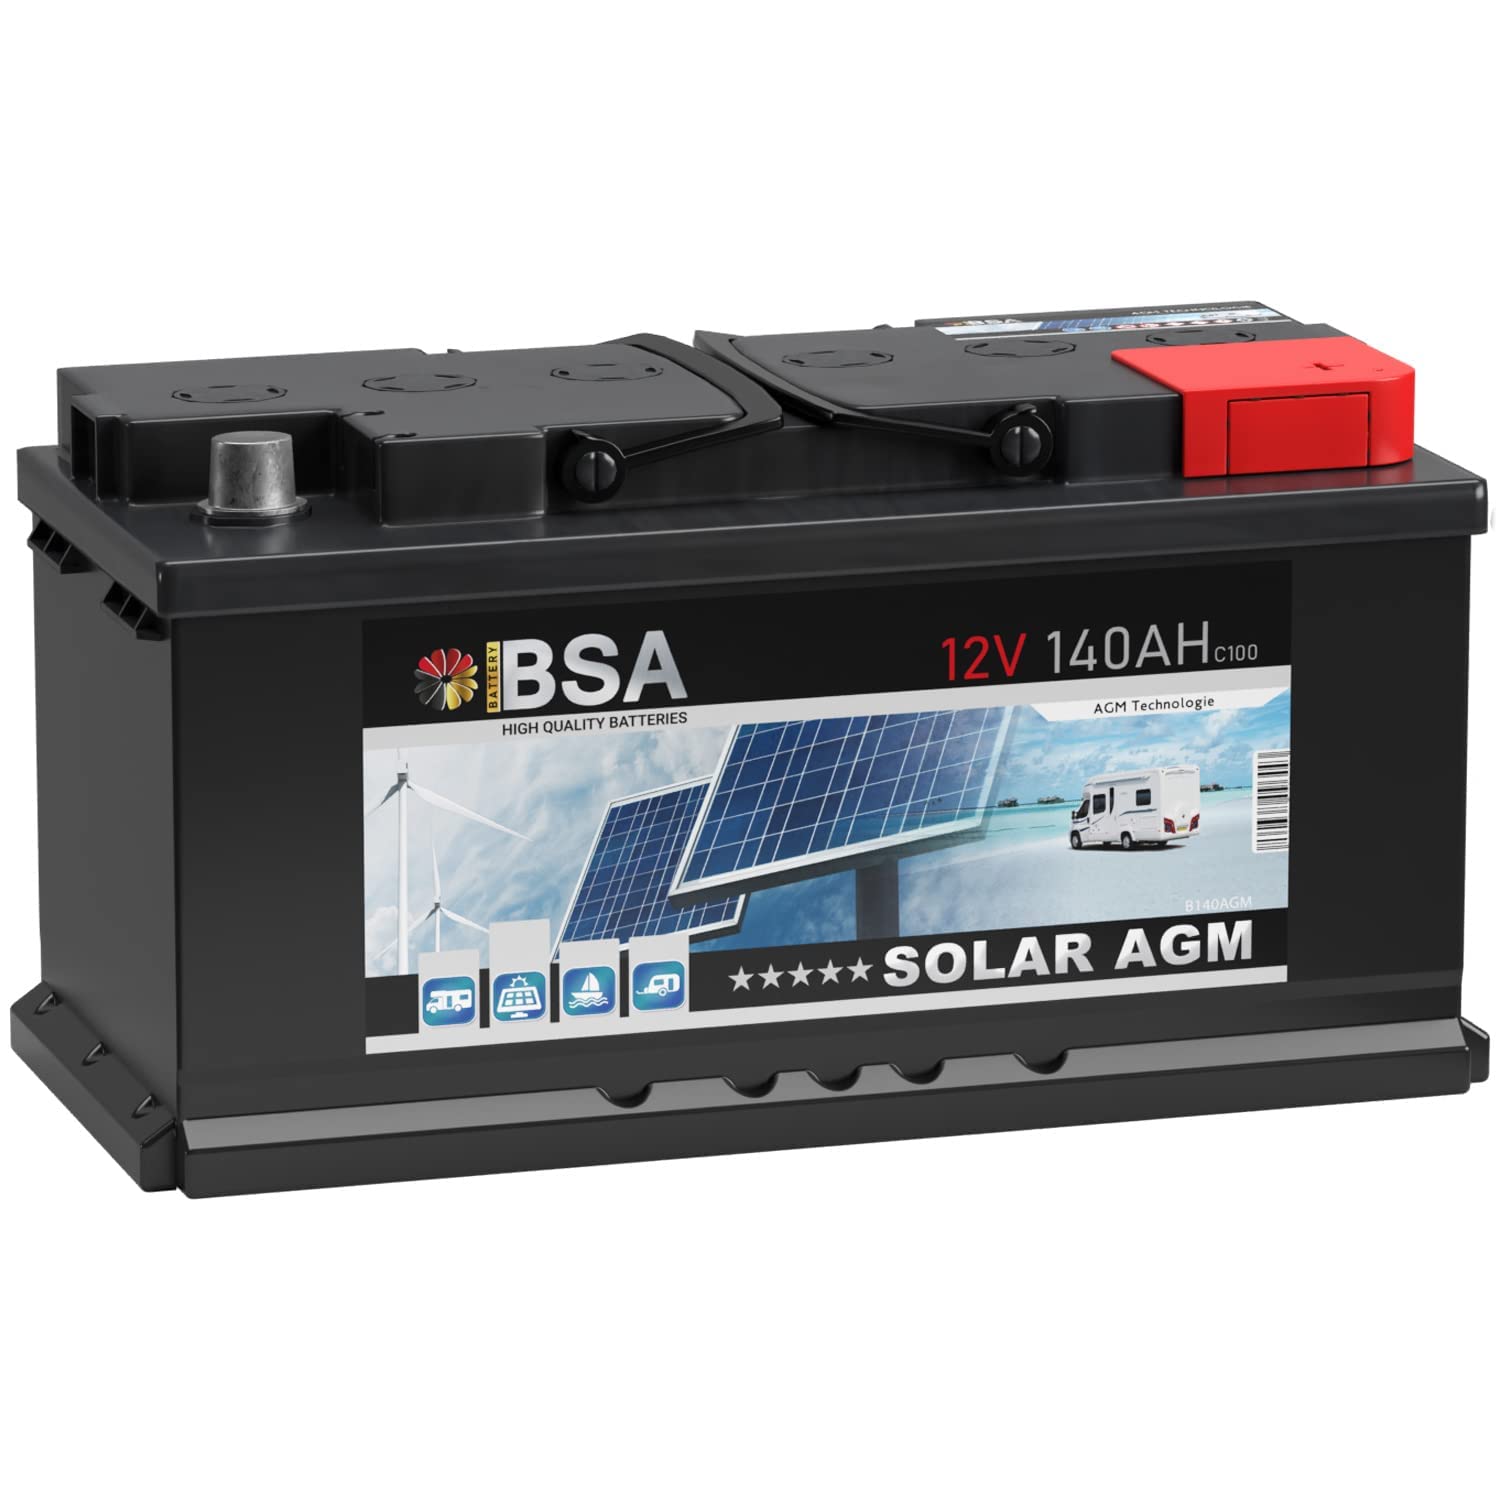 BSA AGM Batterie 140Ah 12V Solarbatterie Deep Cycle Wohnmobil Bootsbatterie zyklenfeste wartungsfreie VRLA Batterie ersetzt 120Ah 130Ah